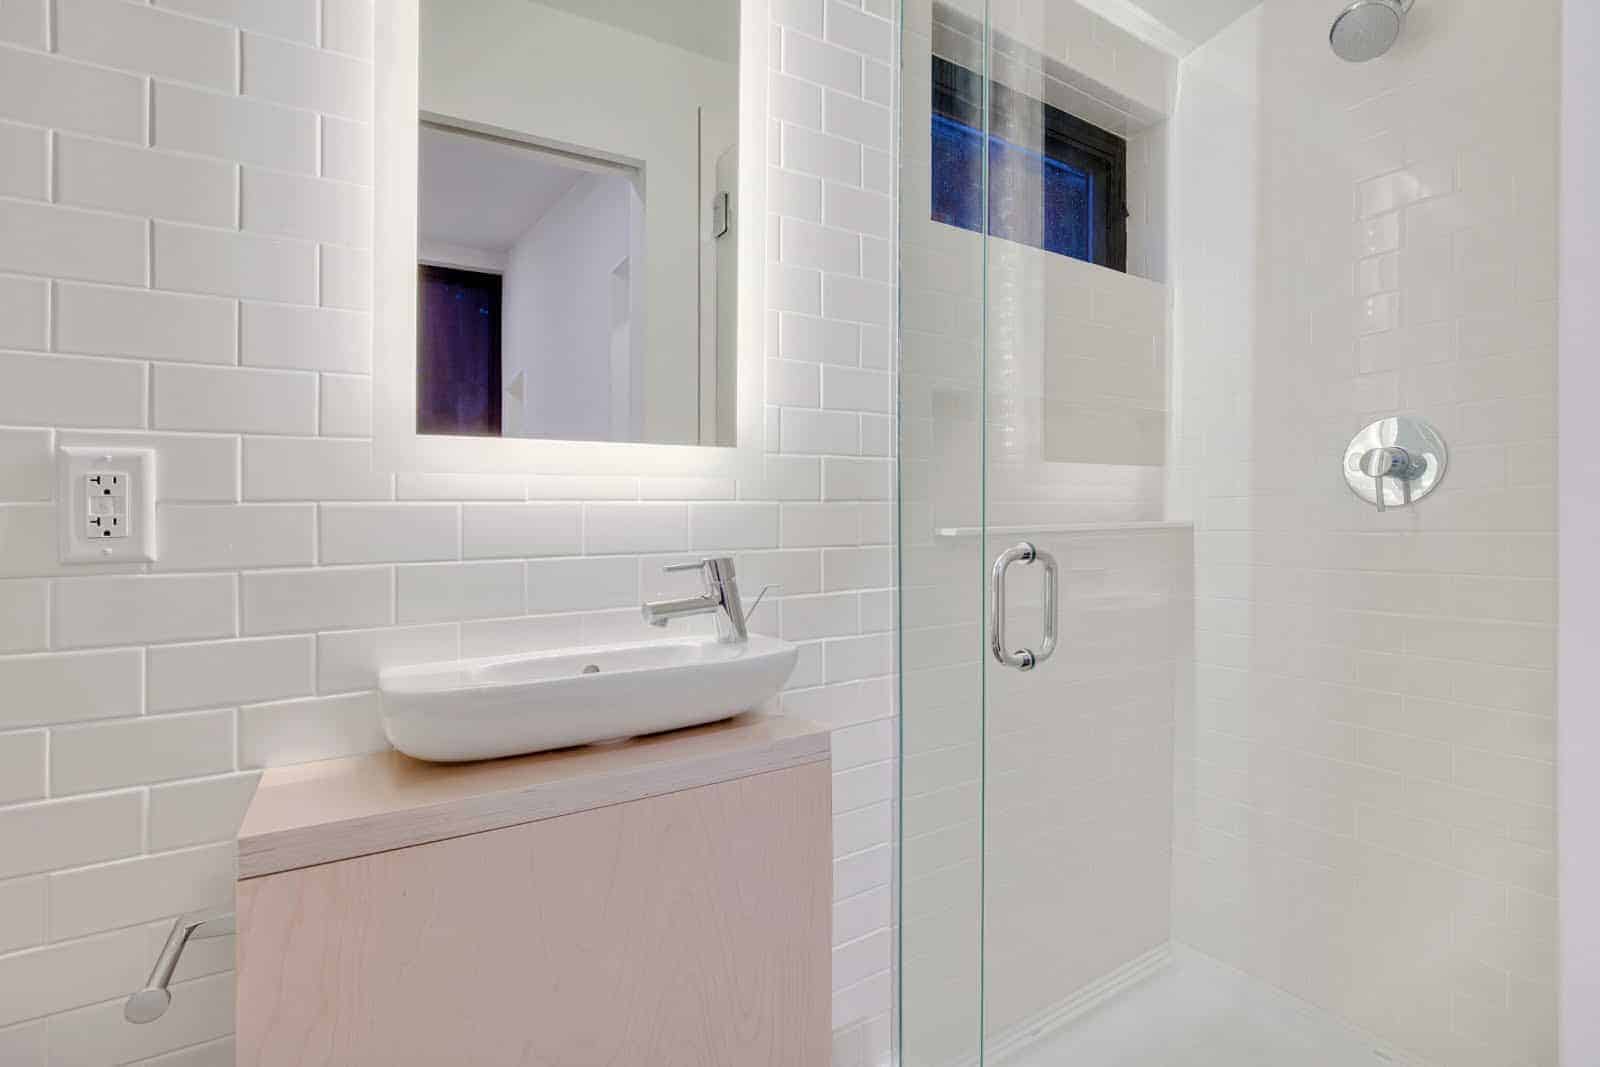 NODE Trilium prefab home interior - bathroom.